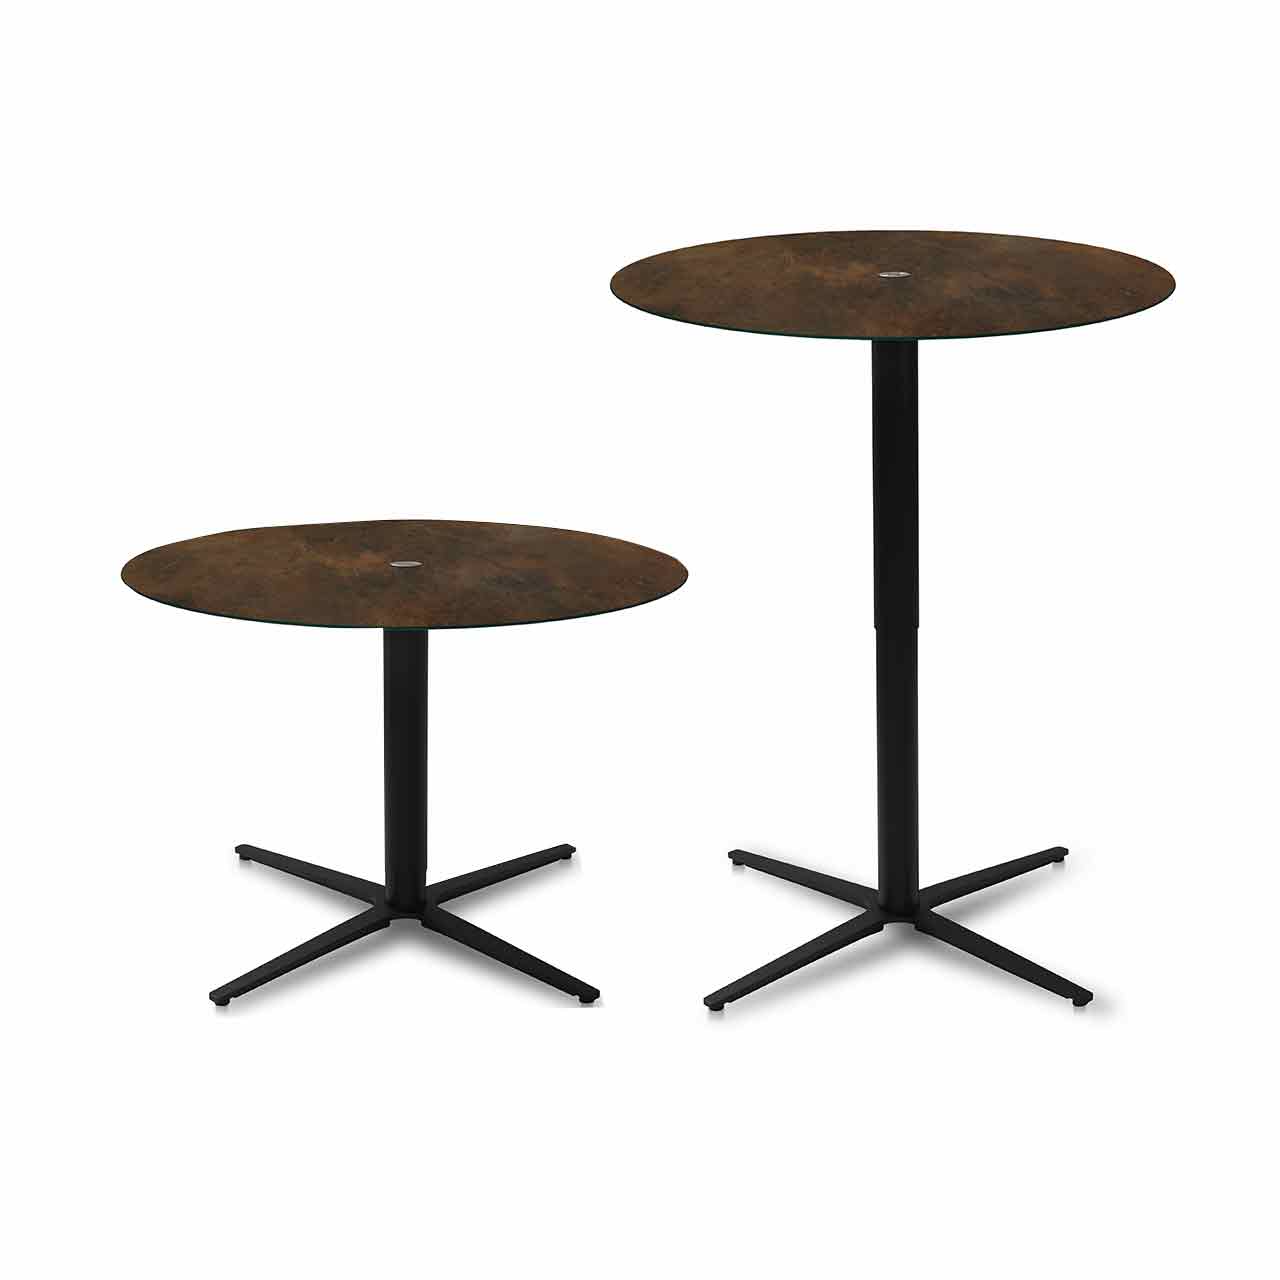 Ronald Schmitt – Triplex P431 | Tischplatte Keramik Ossido Bruno 90 cm, Sternfuß schwarz, links Tisch unten, rechts Tisch hochgefahren